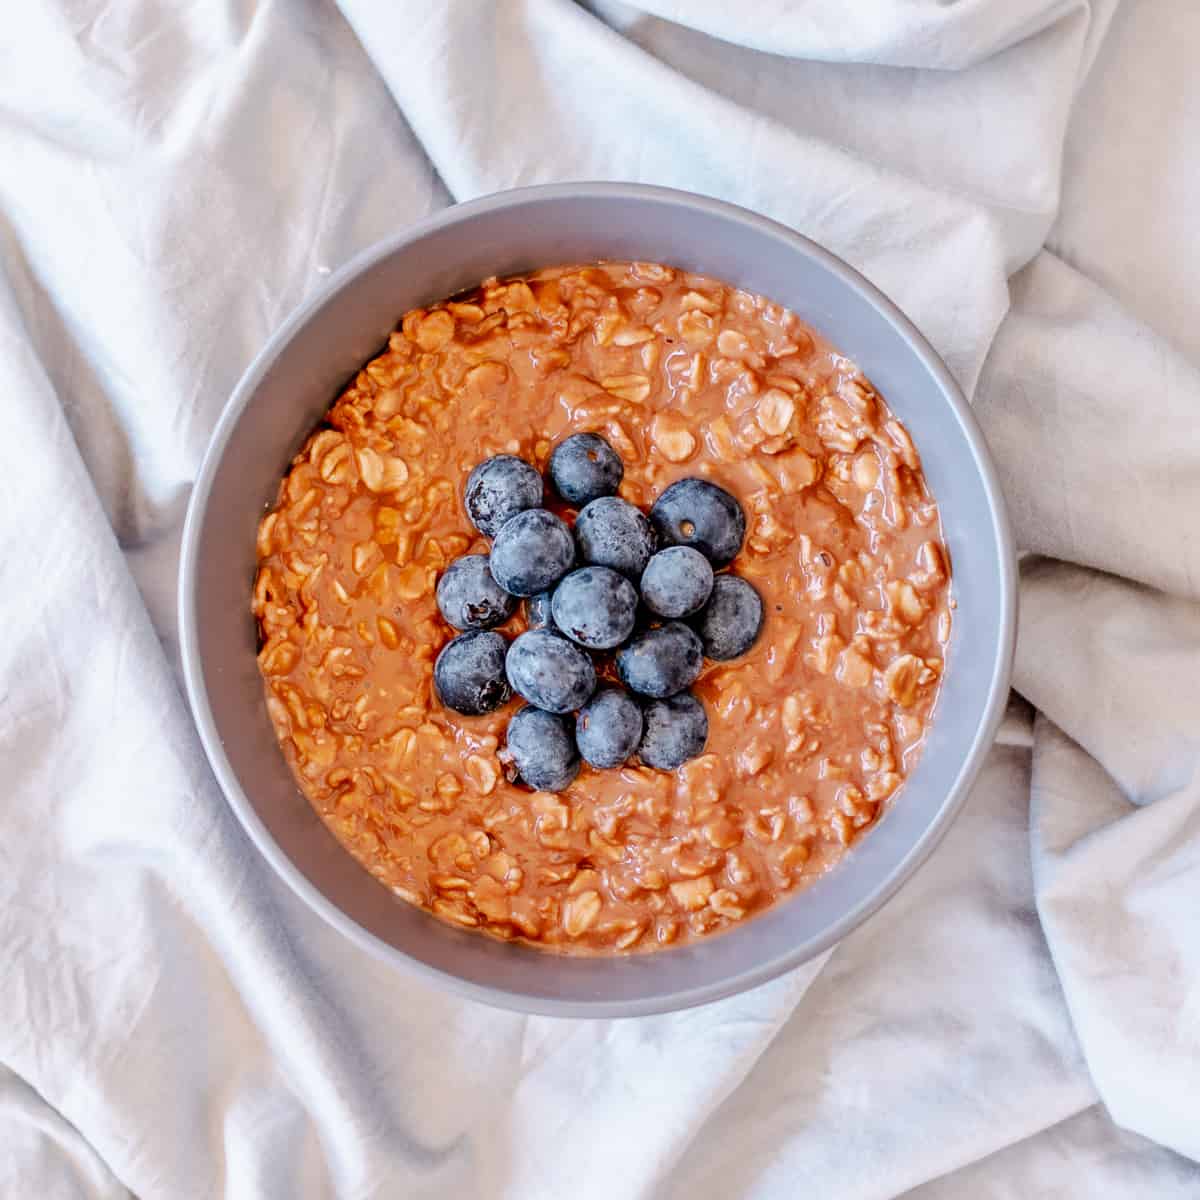 Chocolate Porridge in grey bowl with blueberries